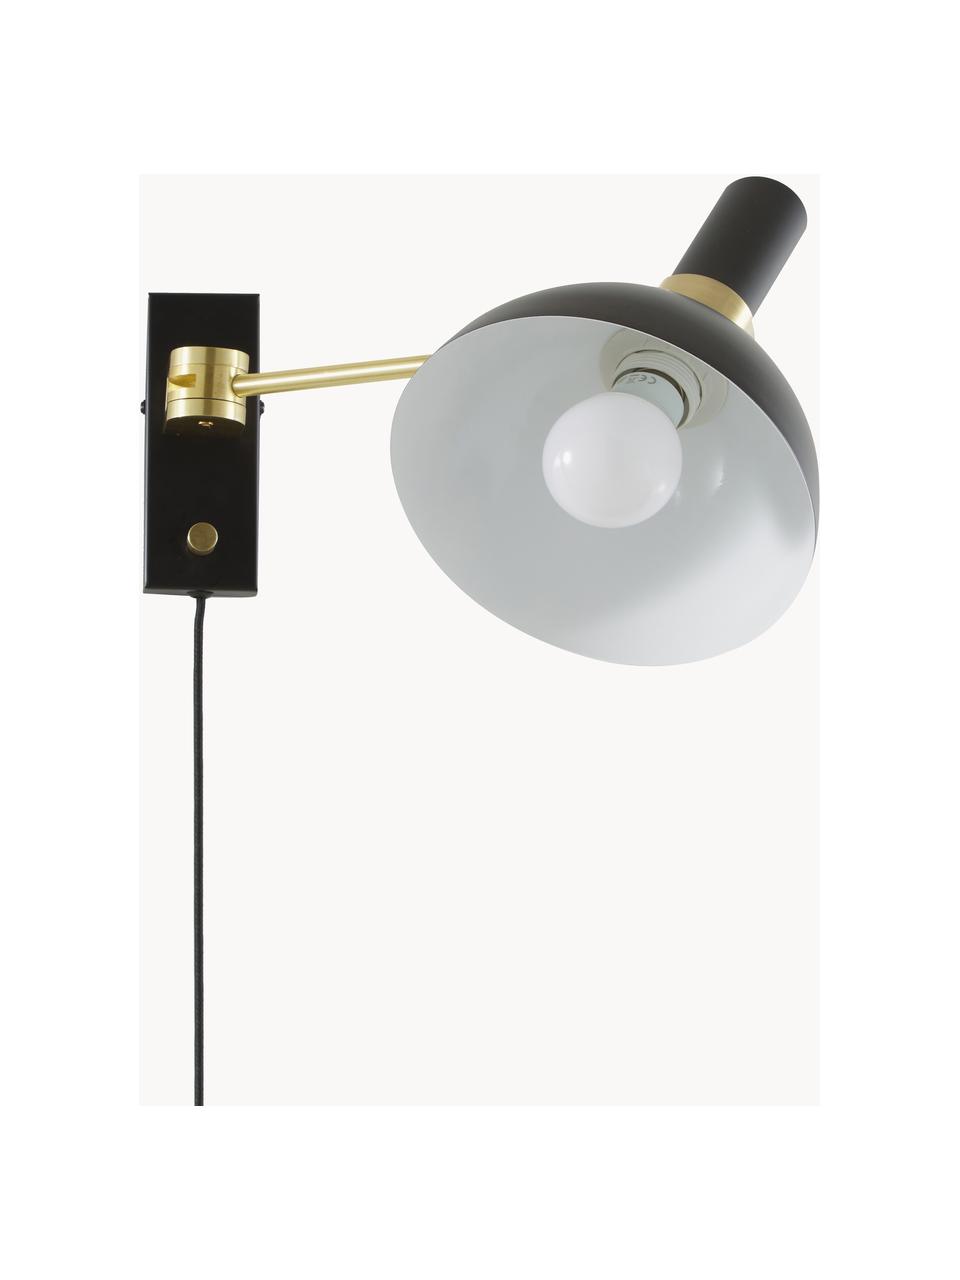 Grote dimbare wandlamp Larry met stekker, Lampenkap: gelakt messing, Frame: messing, Zwart, goudkleurig, D 41 x H 24 cm